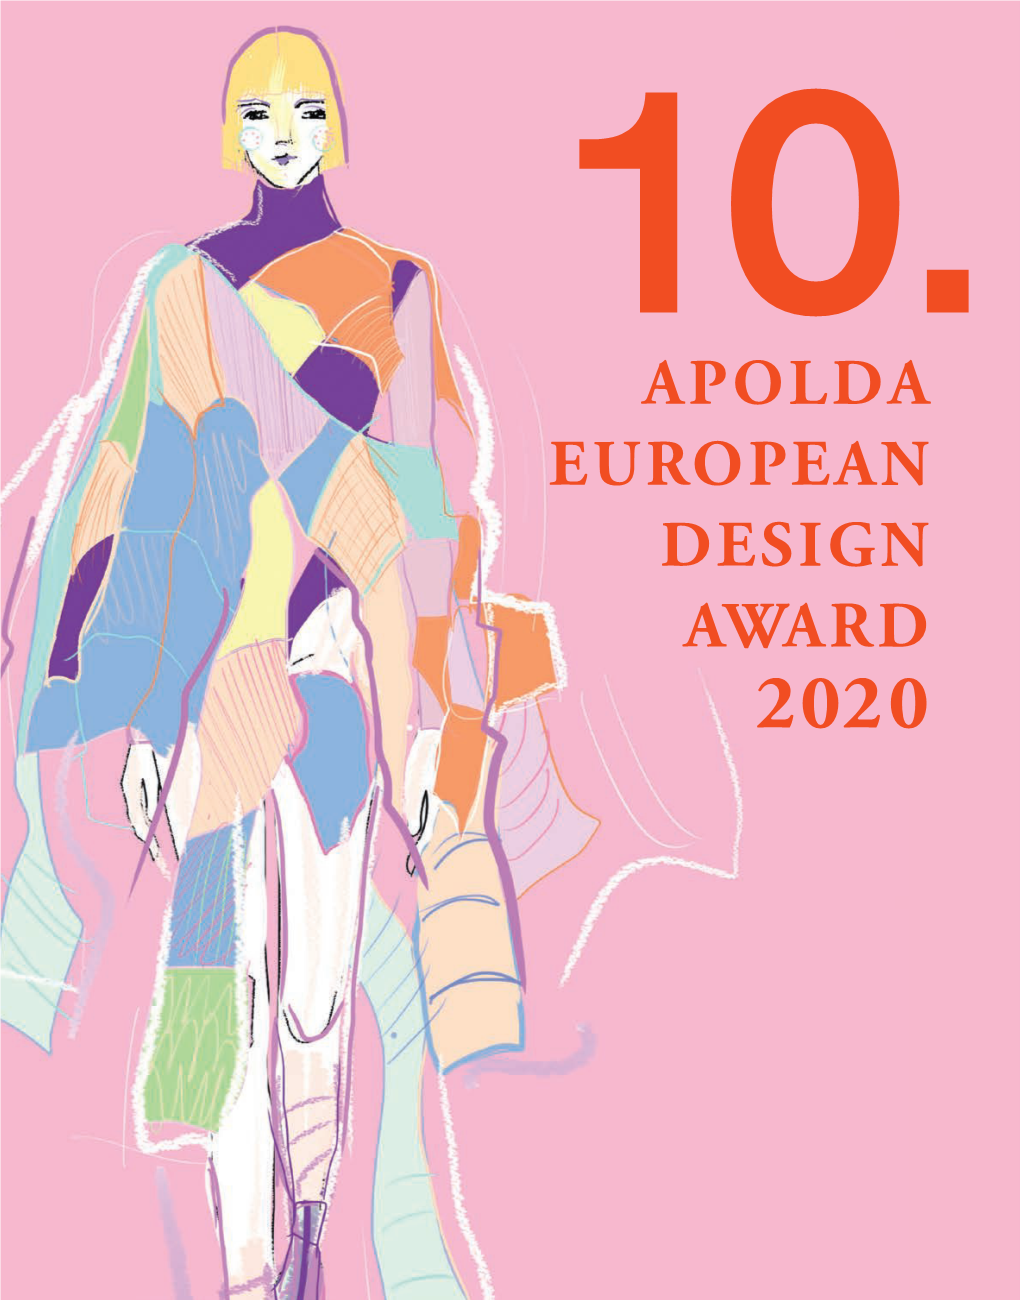 Apolda European Design Award 2020